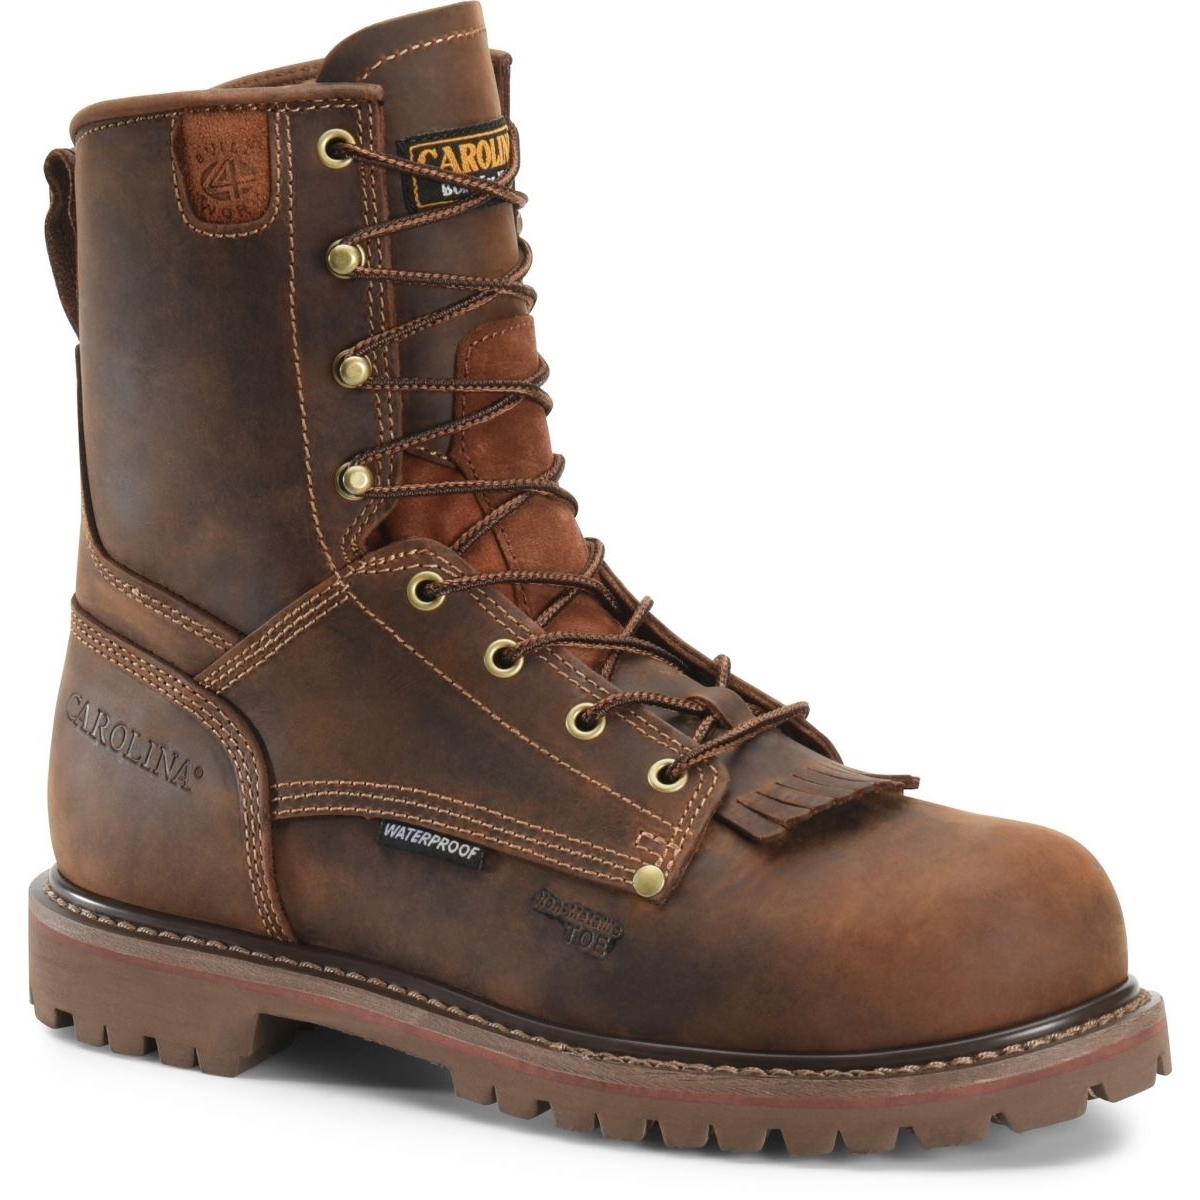 CAROLINA Men's 28 Series 8 Composite Toe Waterproof Work Boot Brown - CA8528 DARK BROWN - DARK BROWN, 7